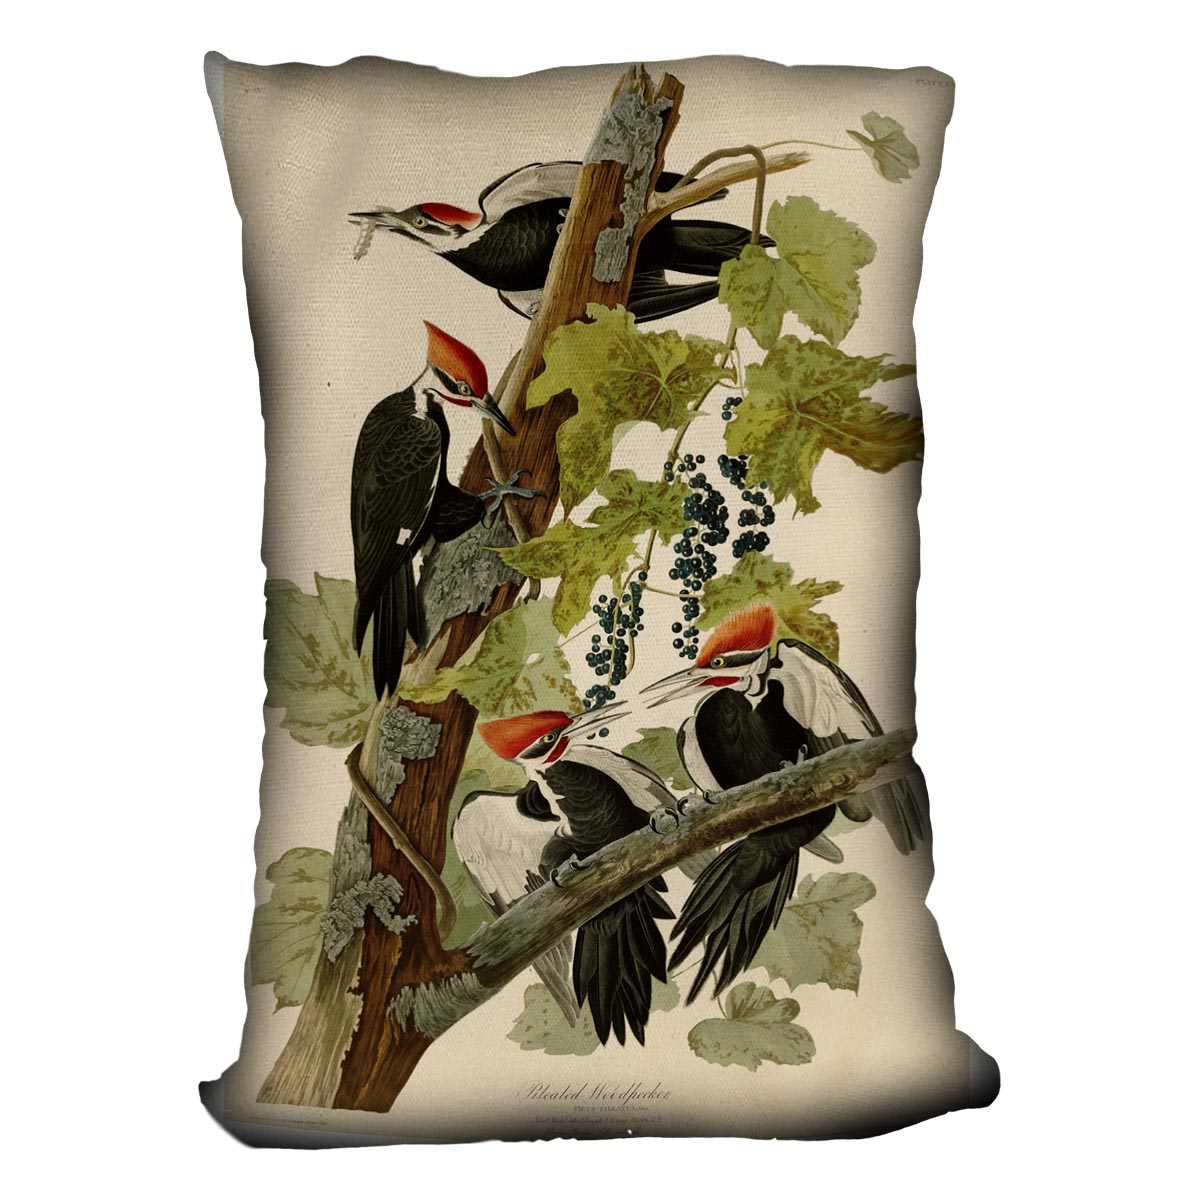 Pileated Woodpecker by Audubon Cushion